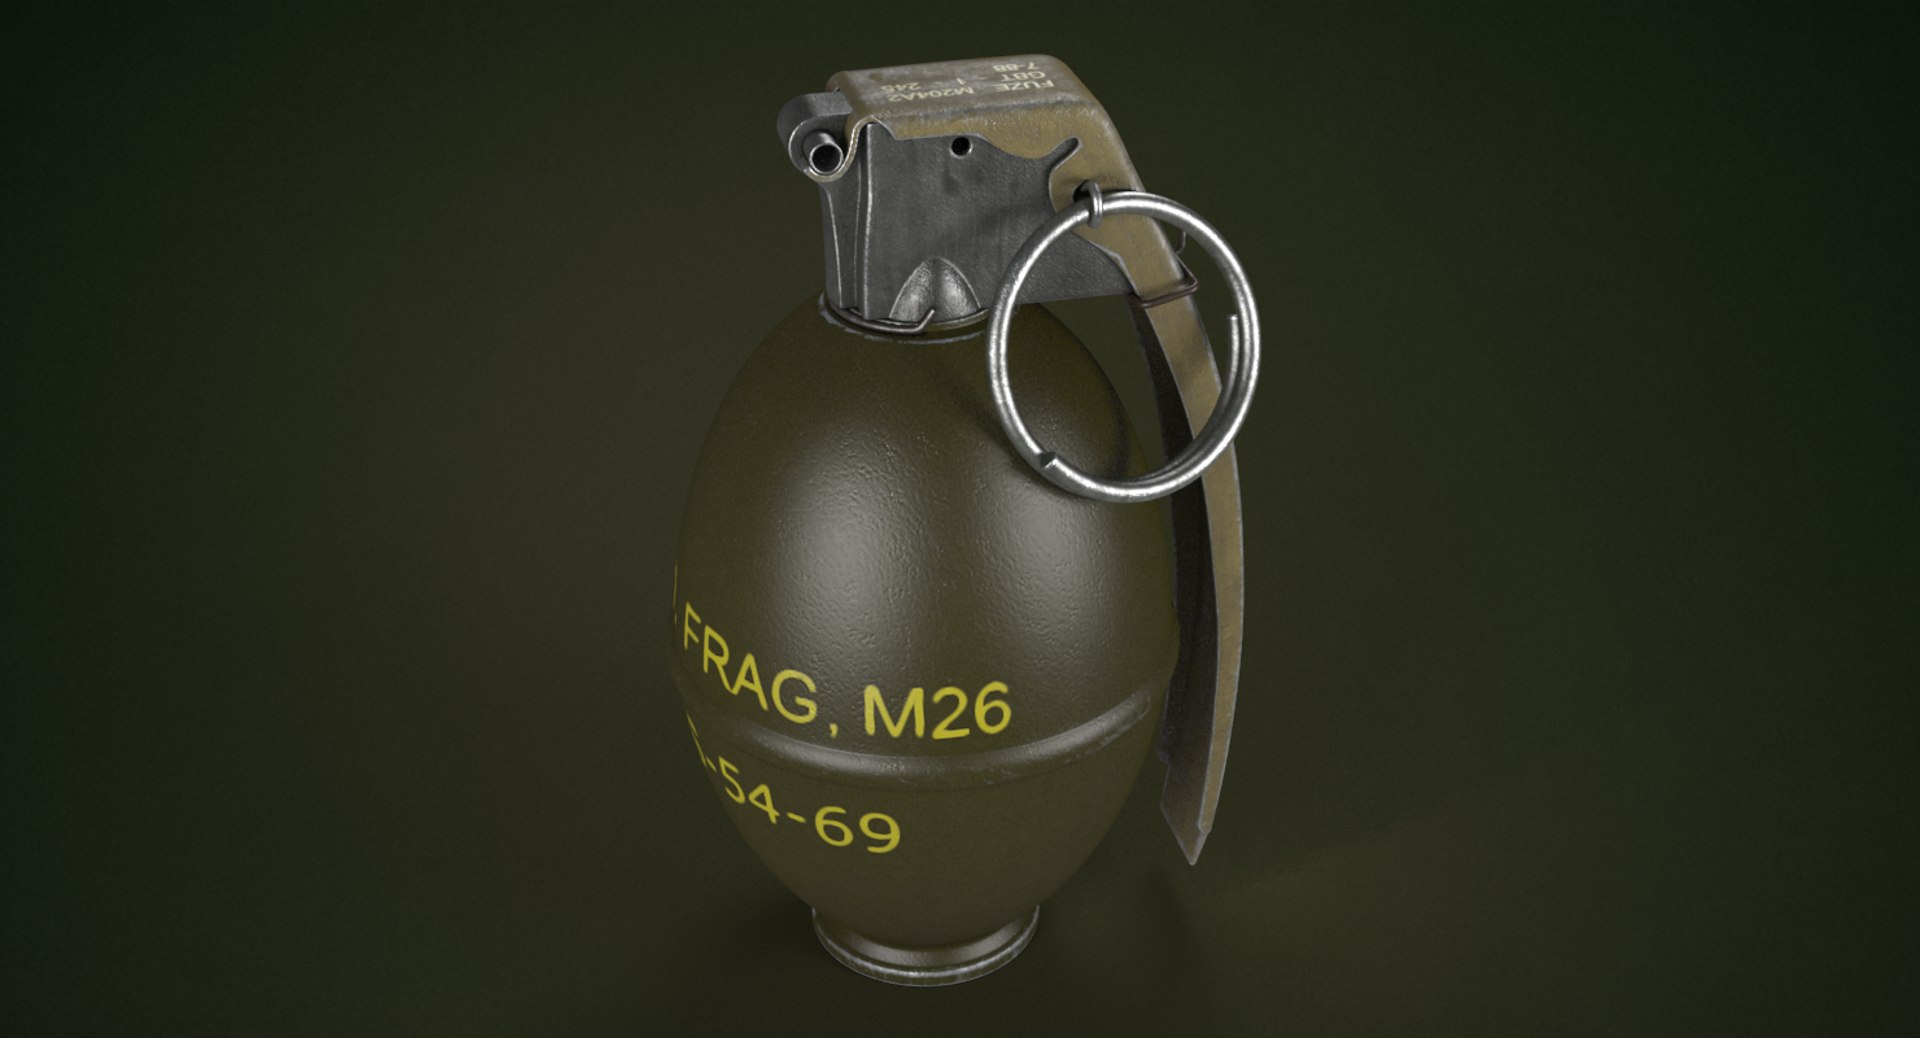 m26 lemon grenade fuse time